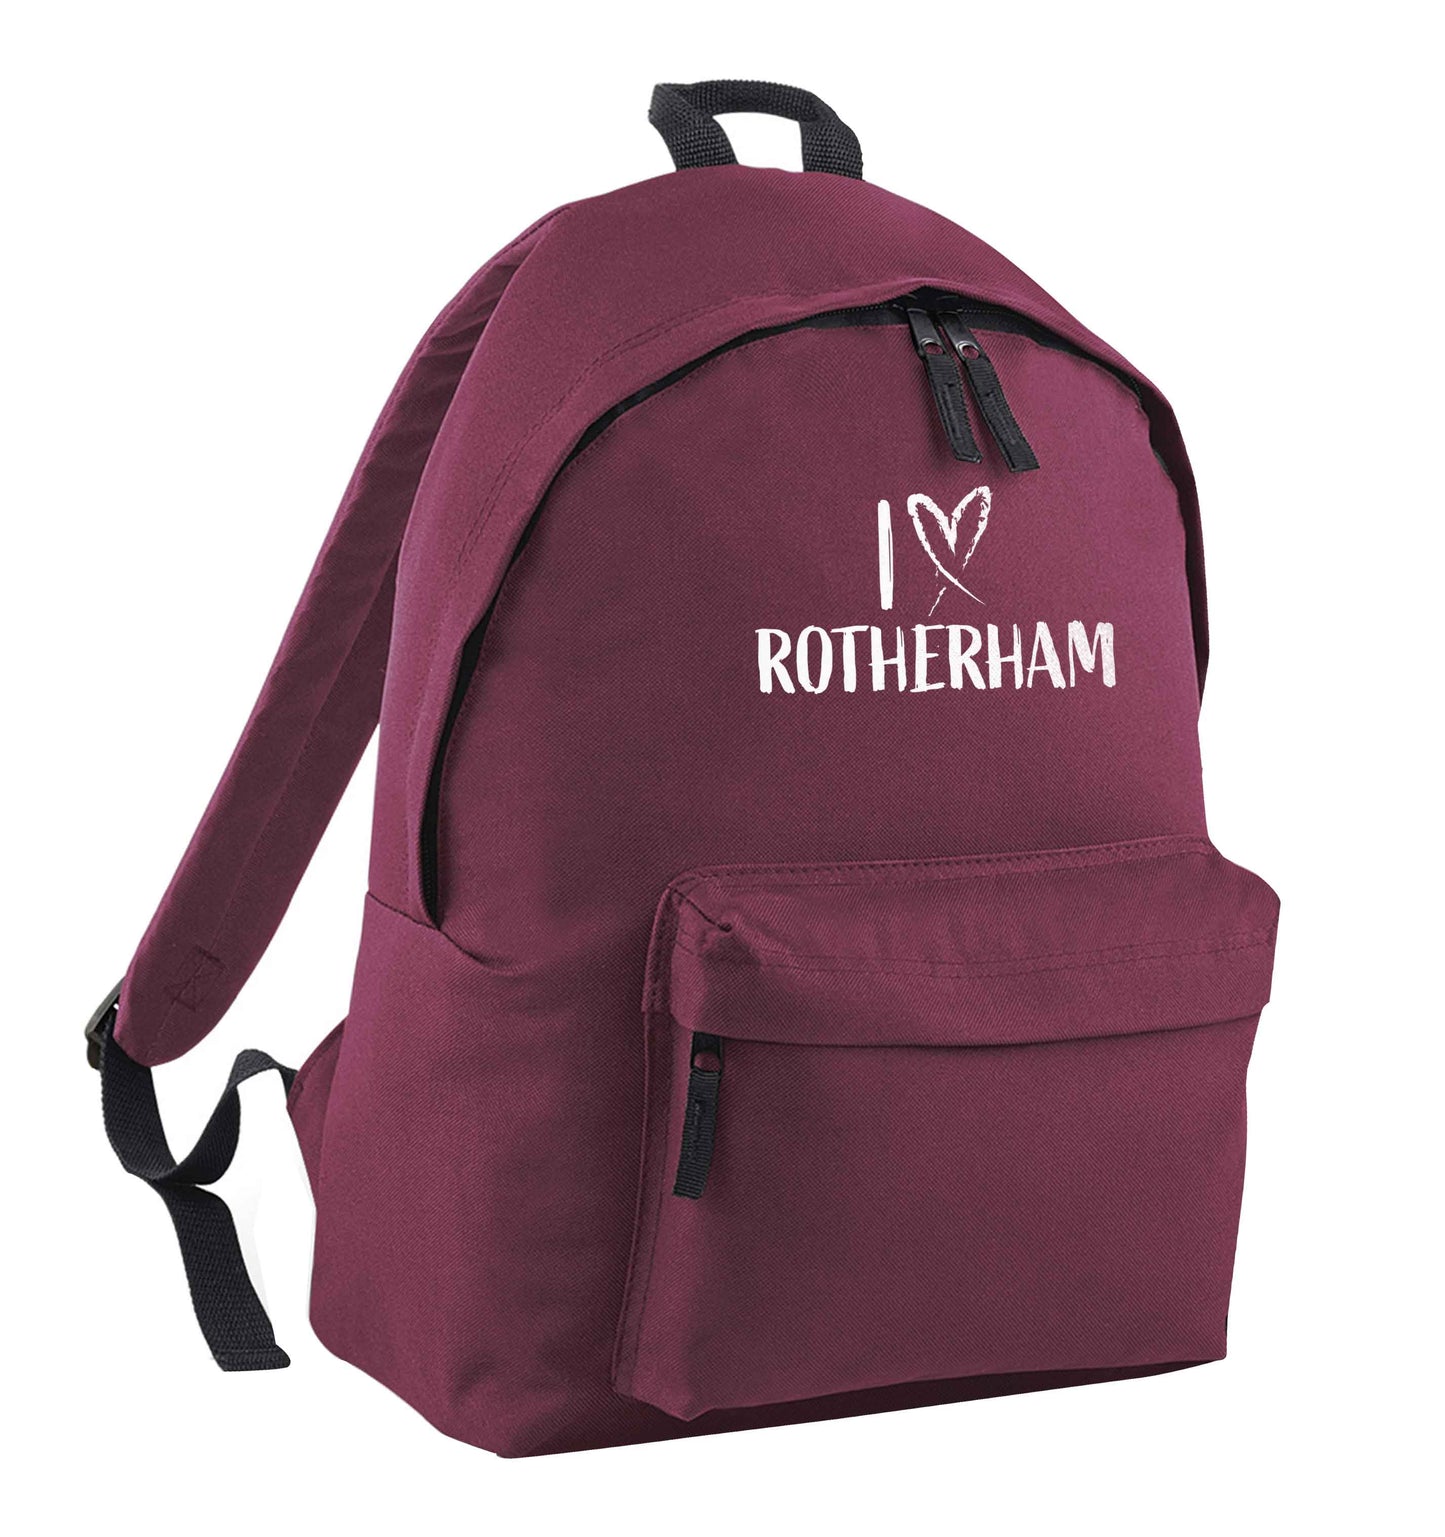 I love Rotherham maroon children's backpack